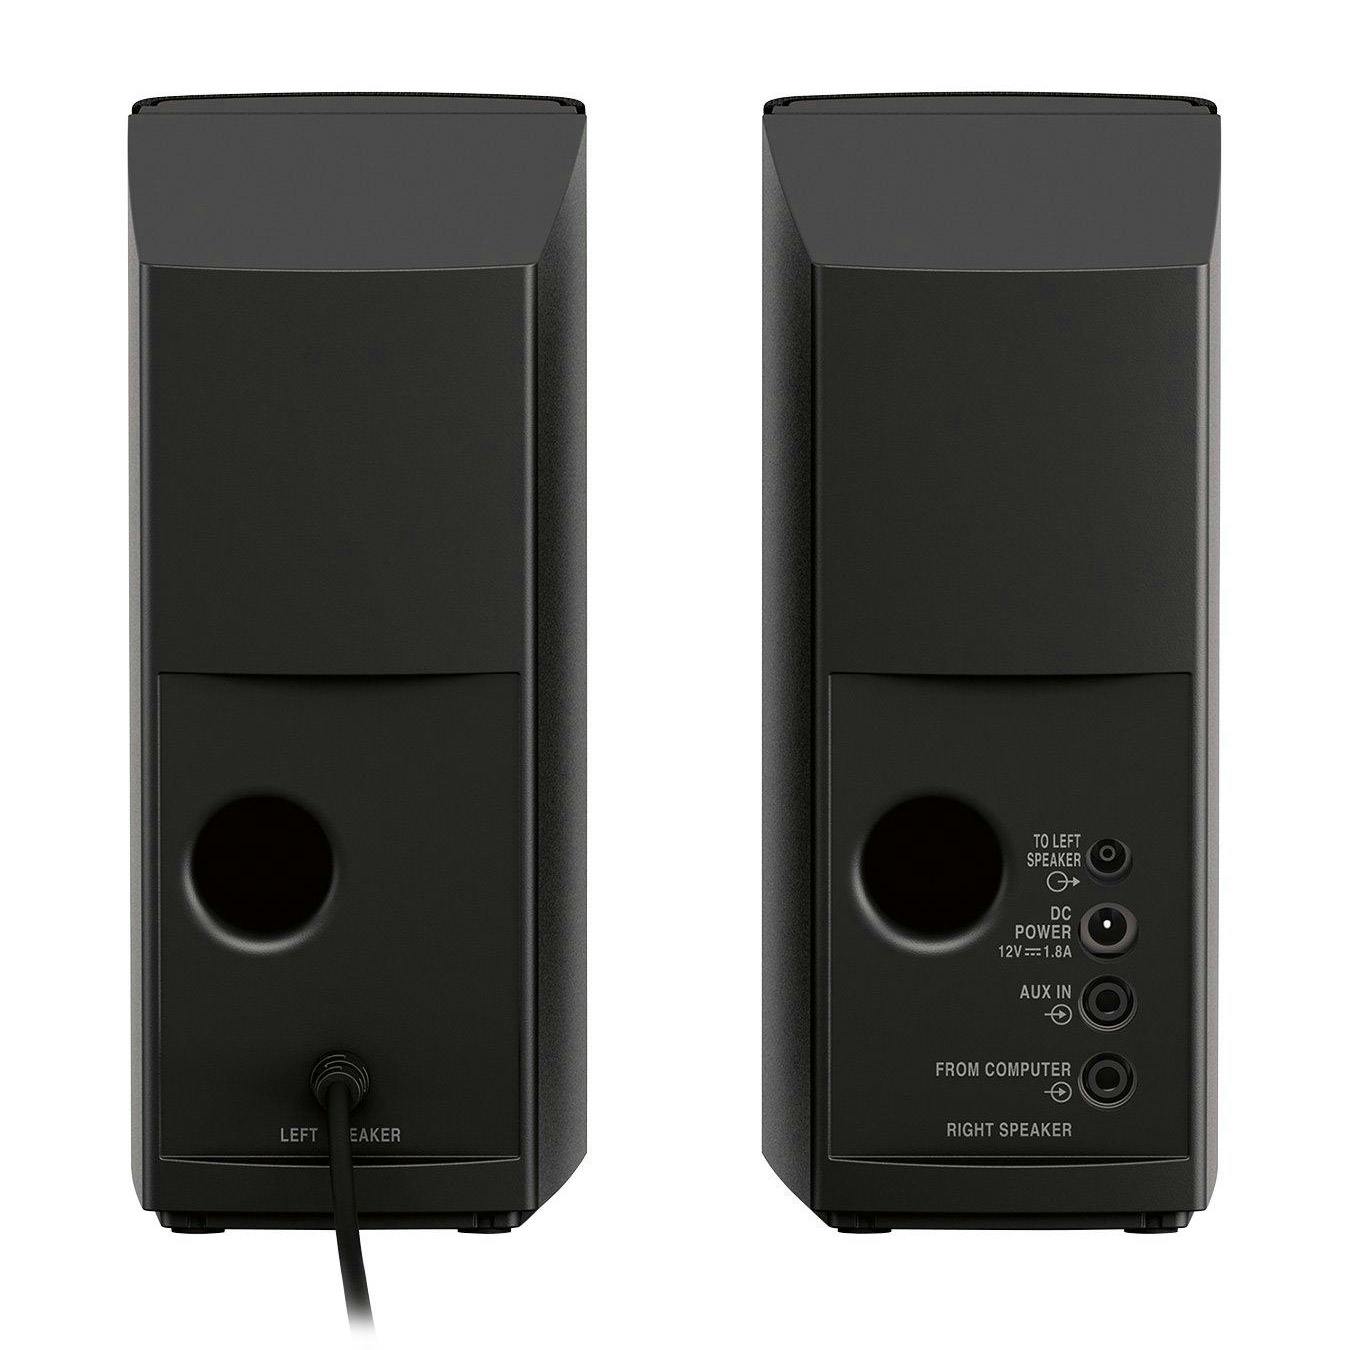 Bose COMPANION-2 Companion 2 Series III Multimedia Speaker System in Blk